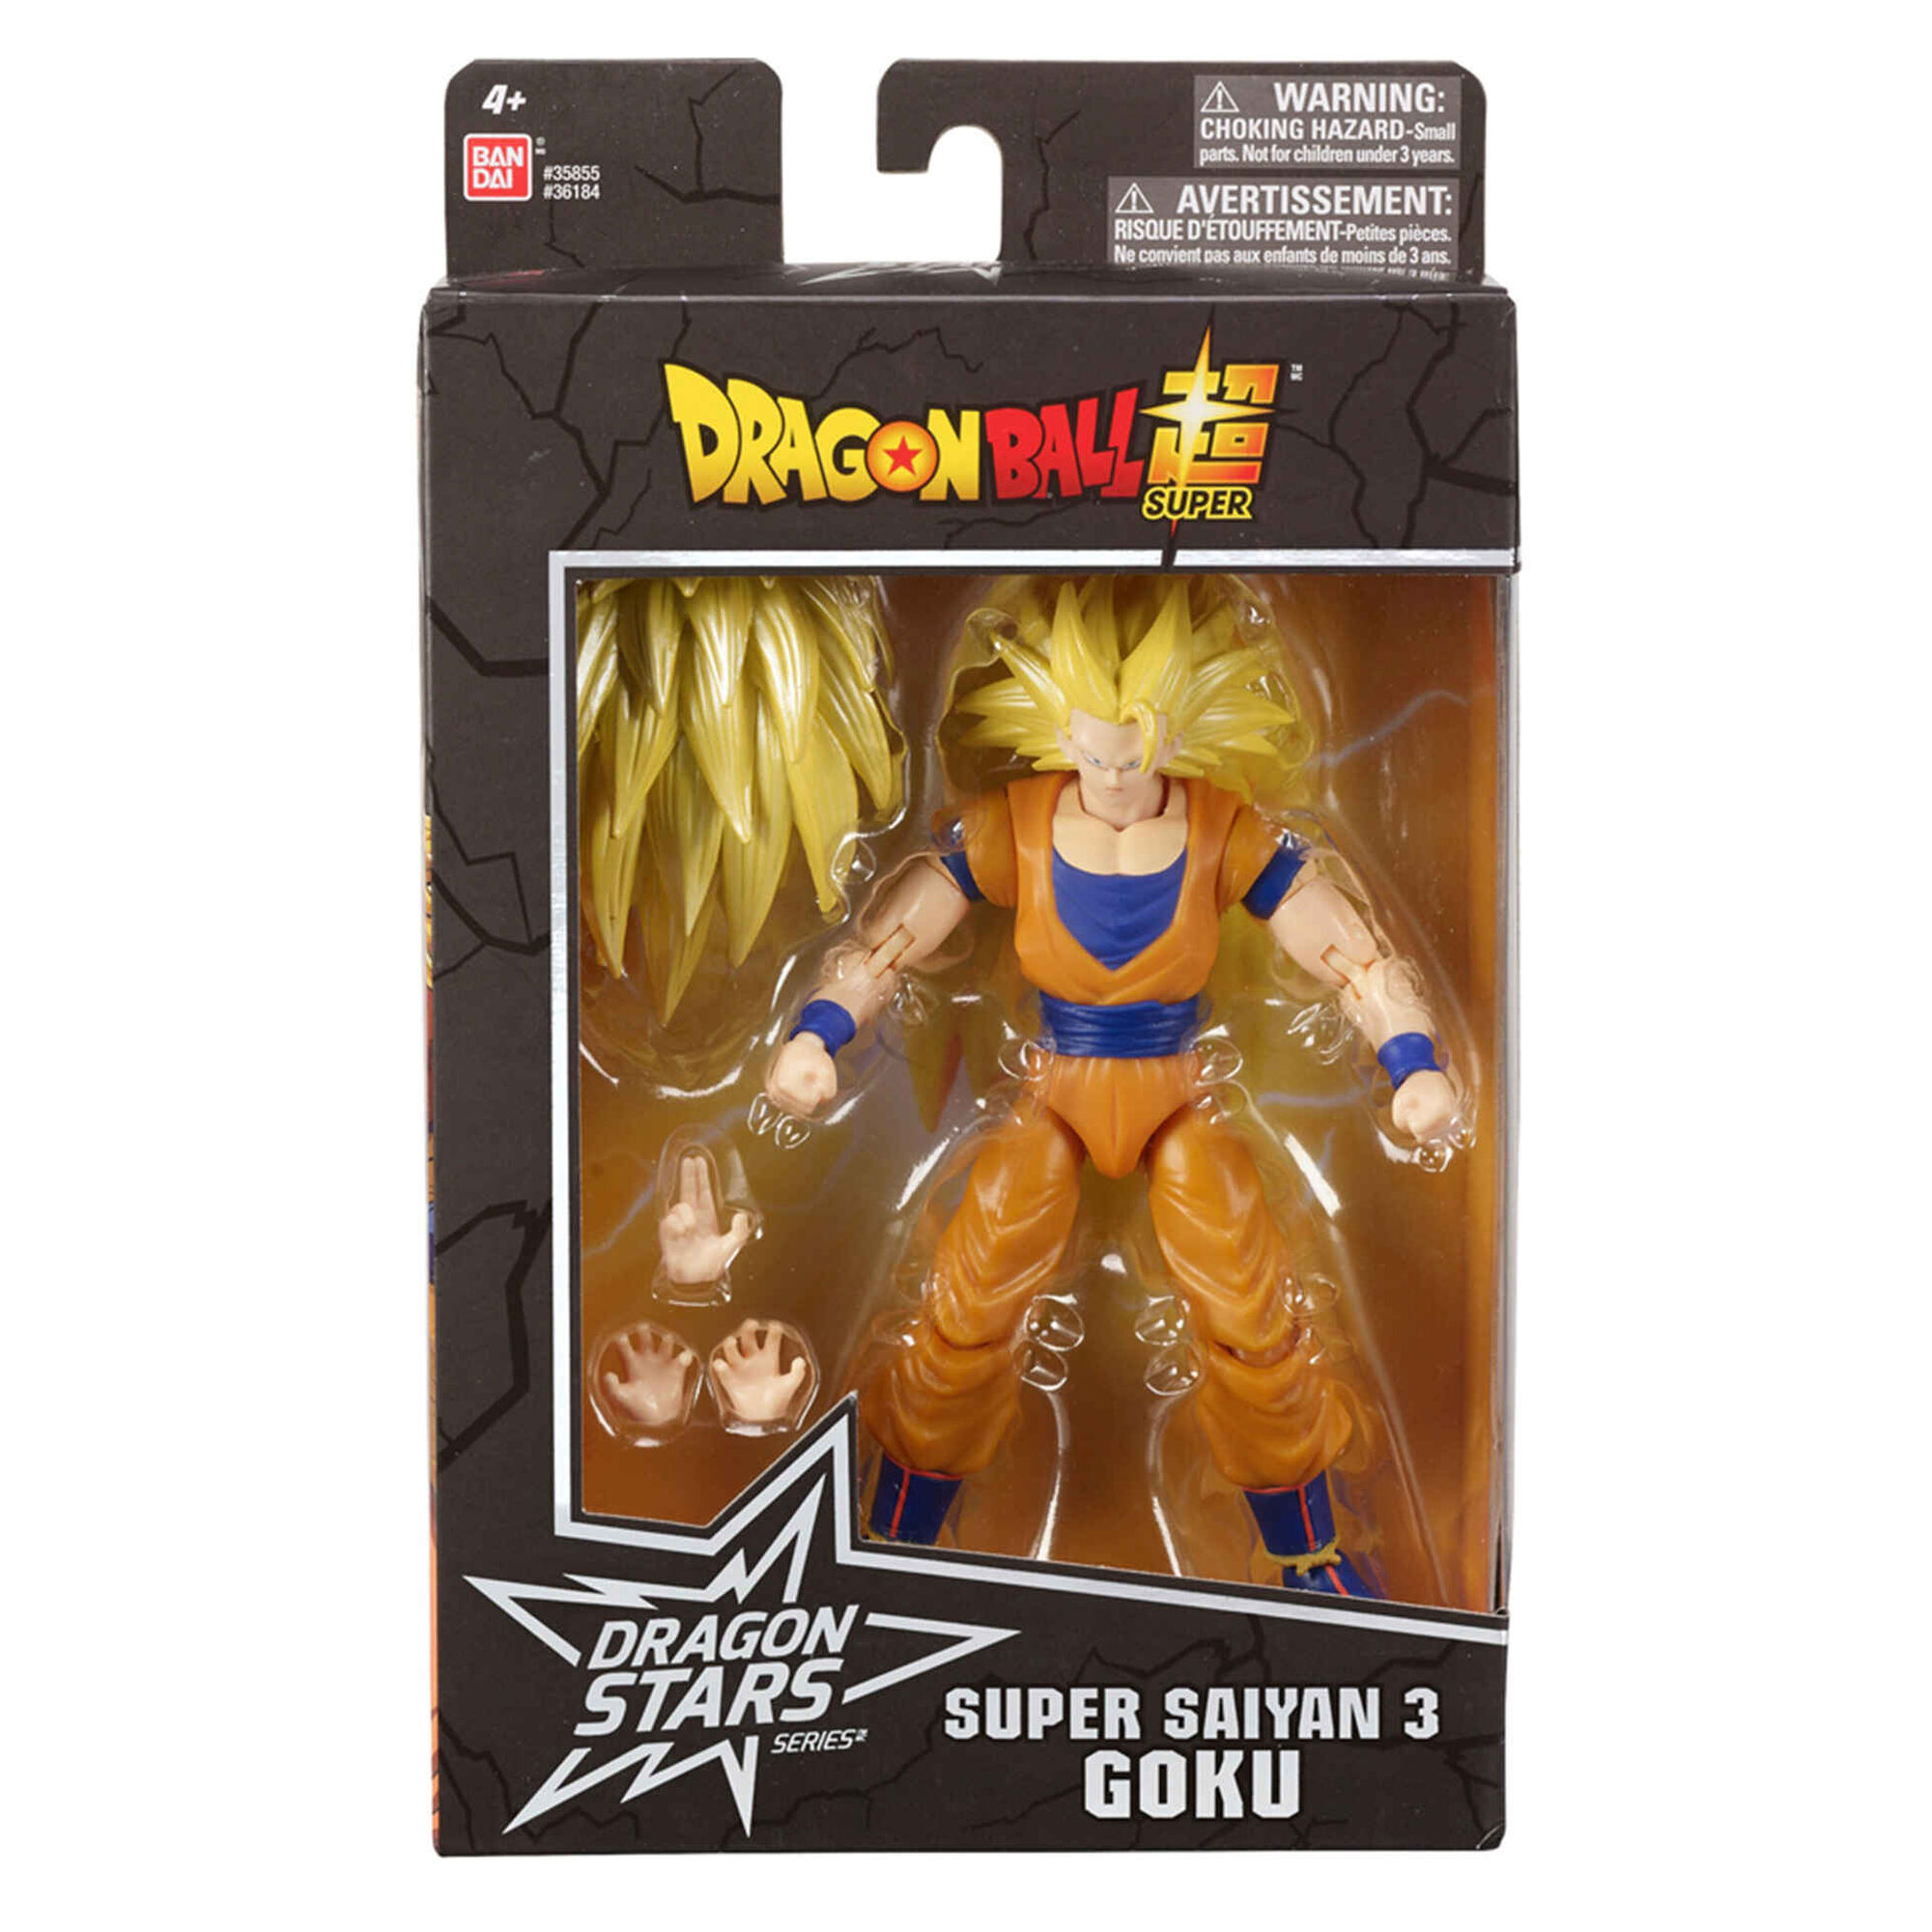 Goku cabelo prateado - Dragon Ball Z - Action figure 17cm